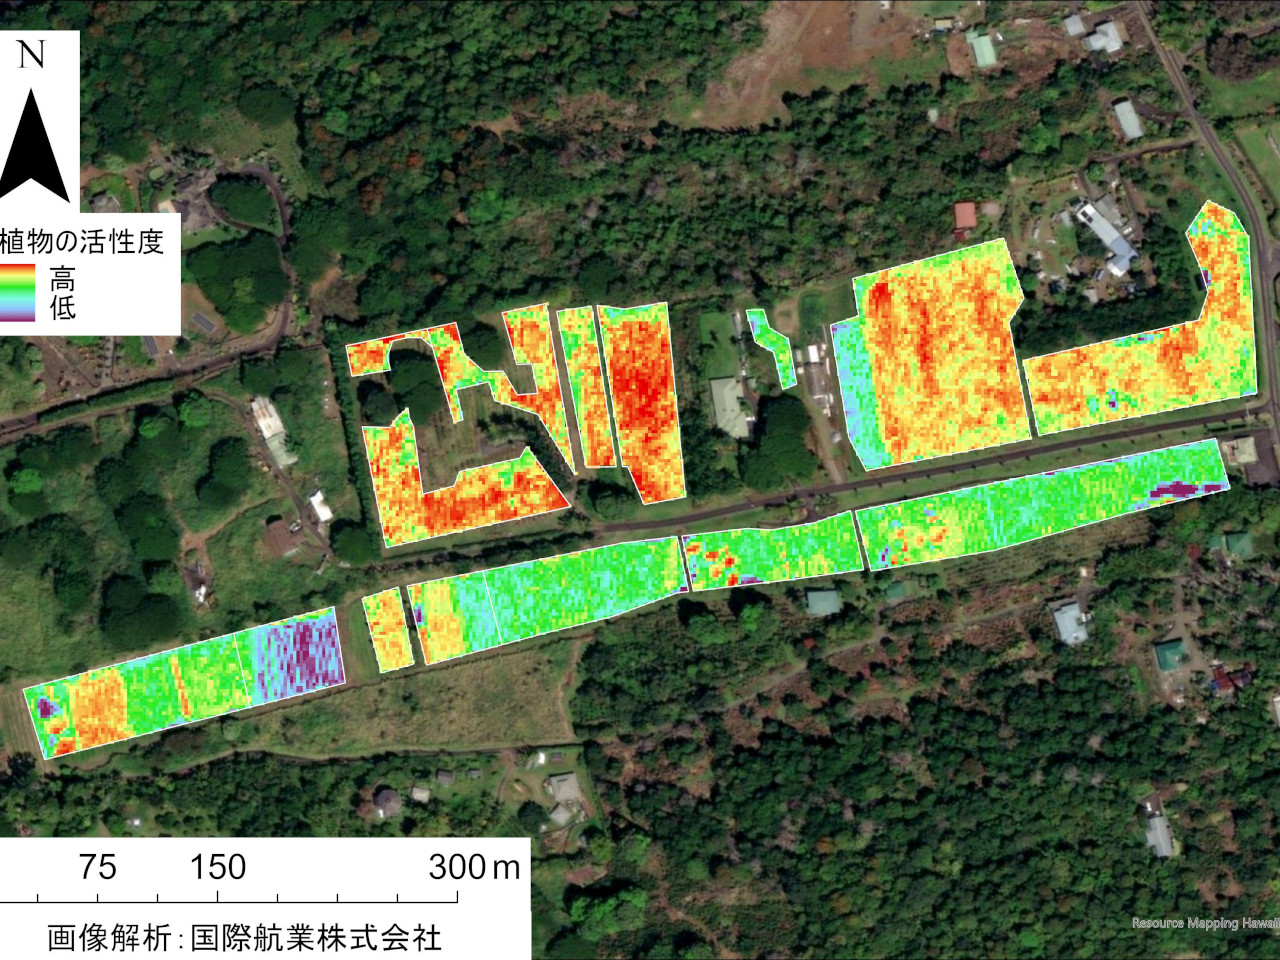 UCCハワイコナコーヒー直営農園における衛星画像解析イメージ（出典：UCC上島珈琲）